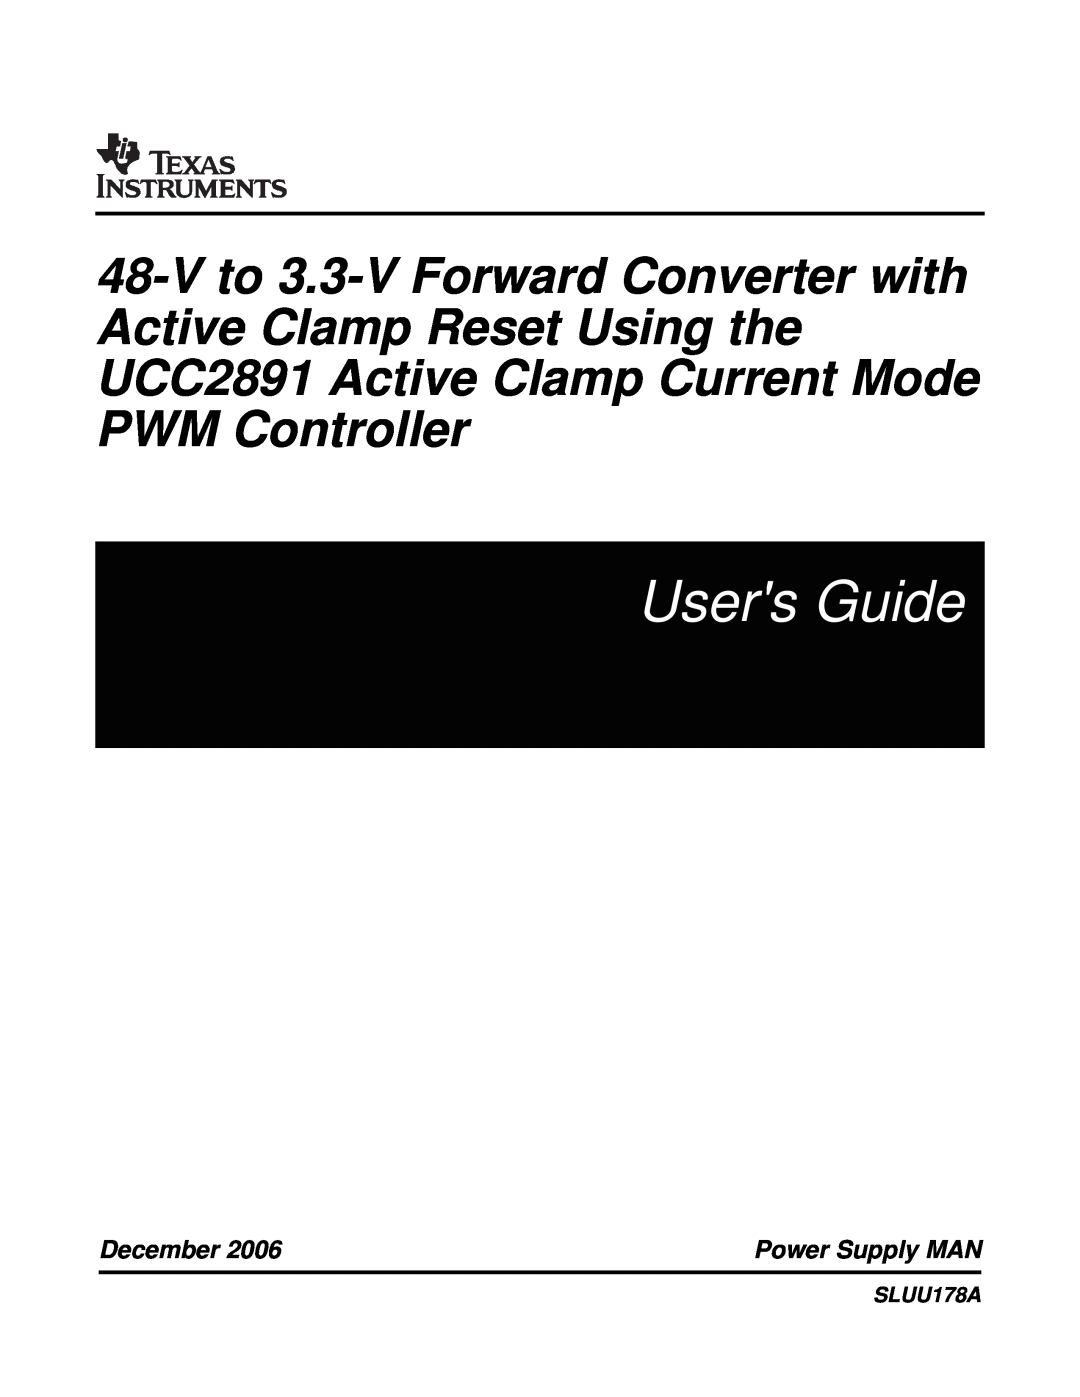 Texas Instruments UCC2891 manual Users Guide, December, Power Supply MAN, SLUU178A 